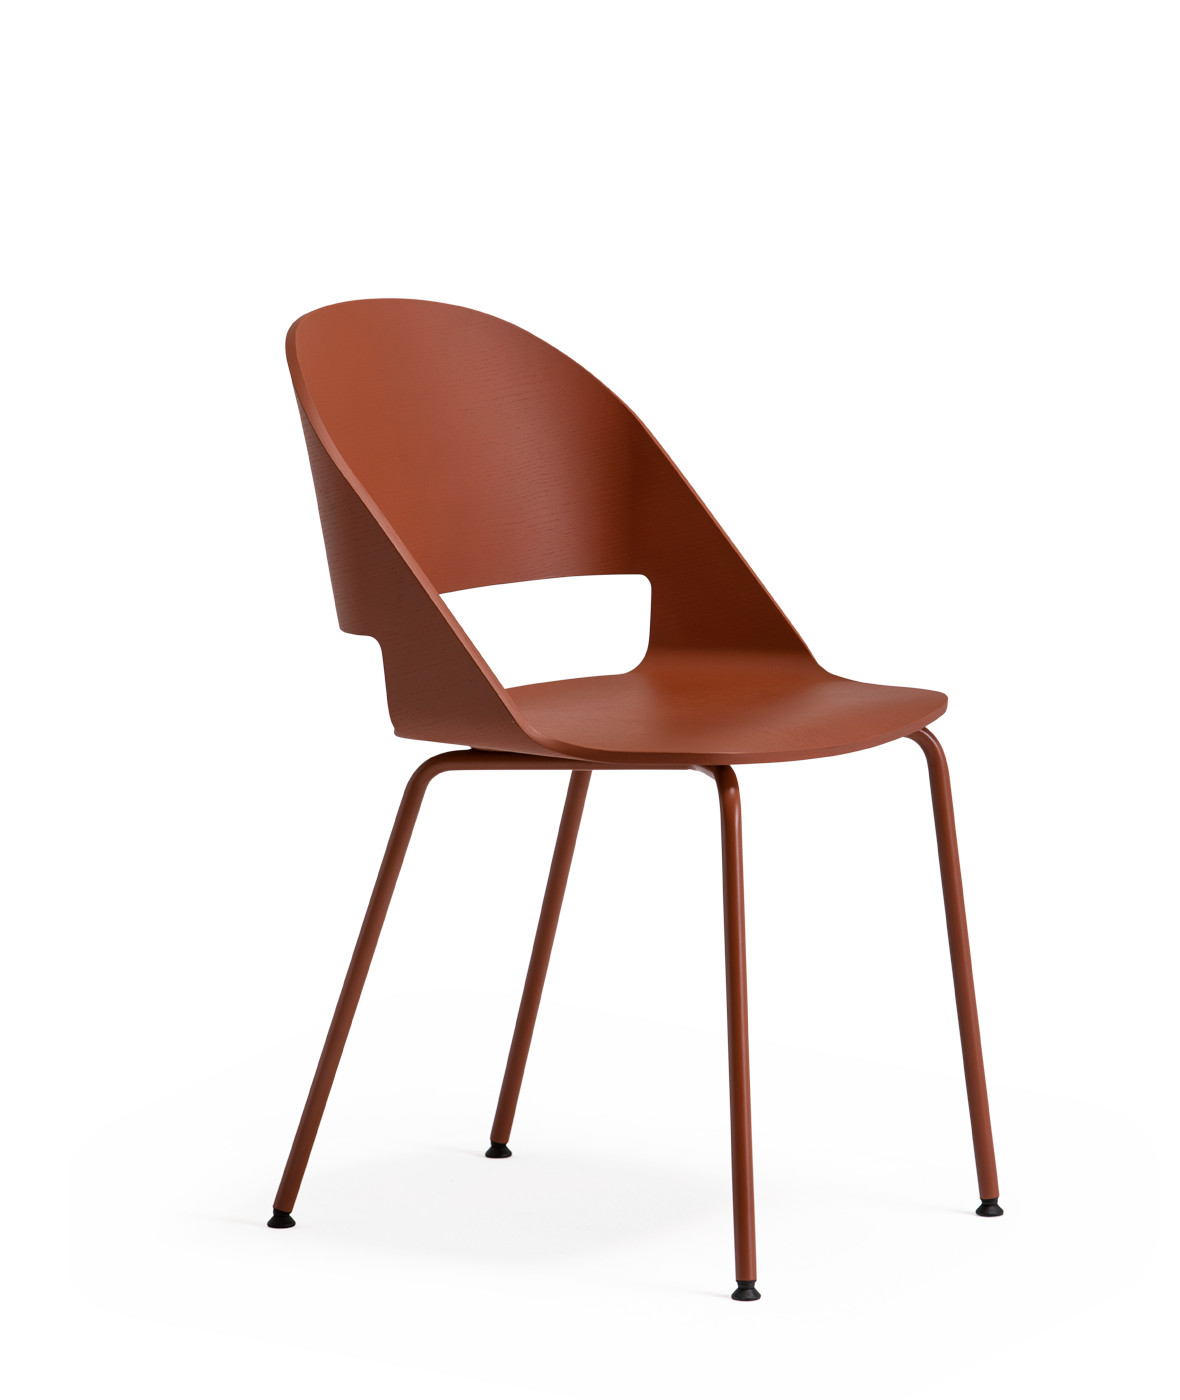 Goose chair Model C with metallic legs - Vergés